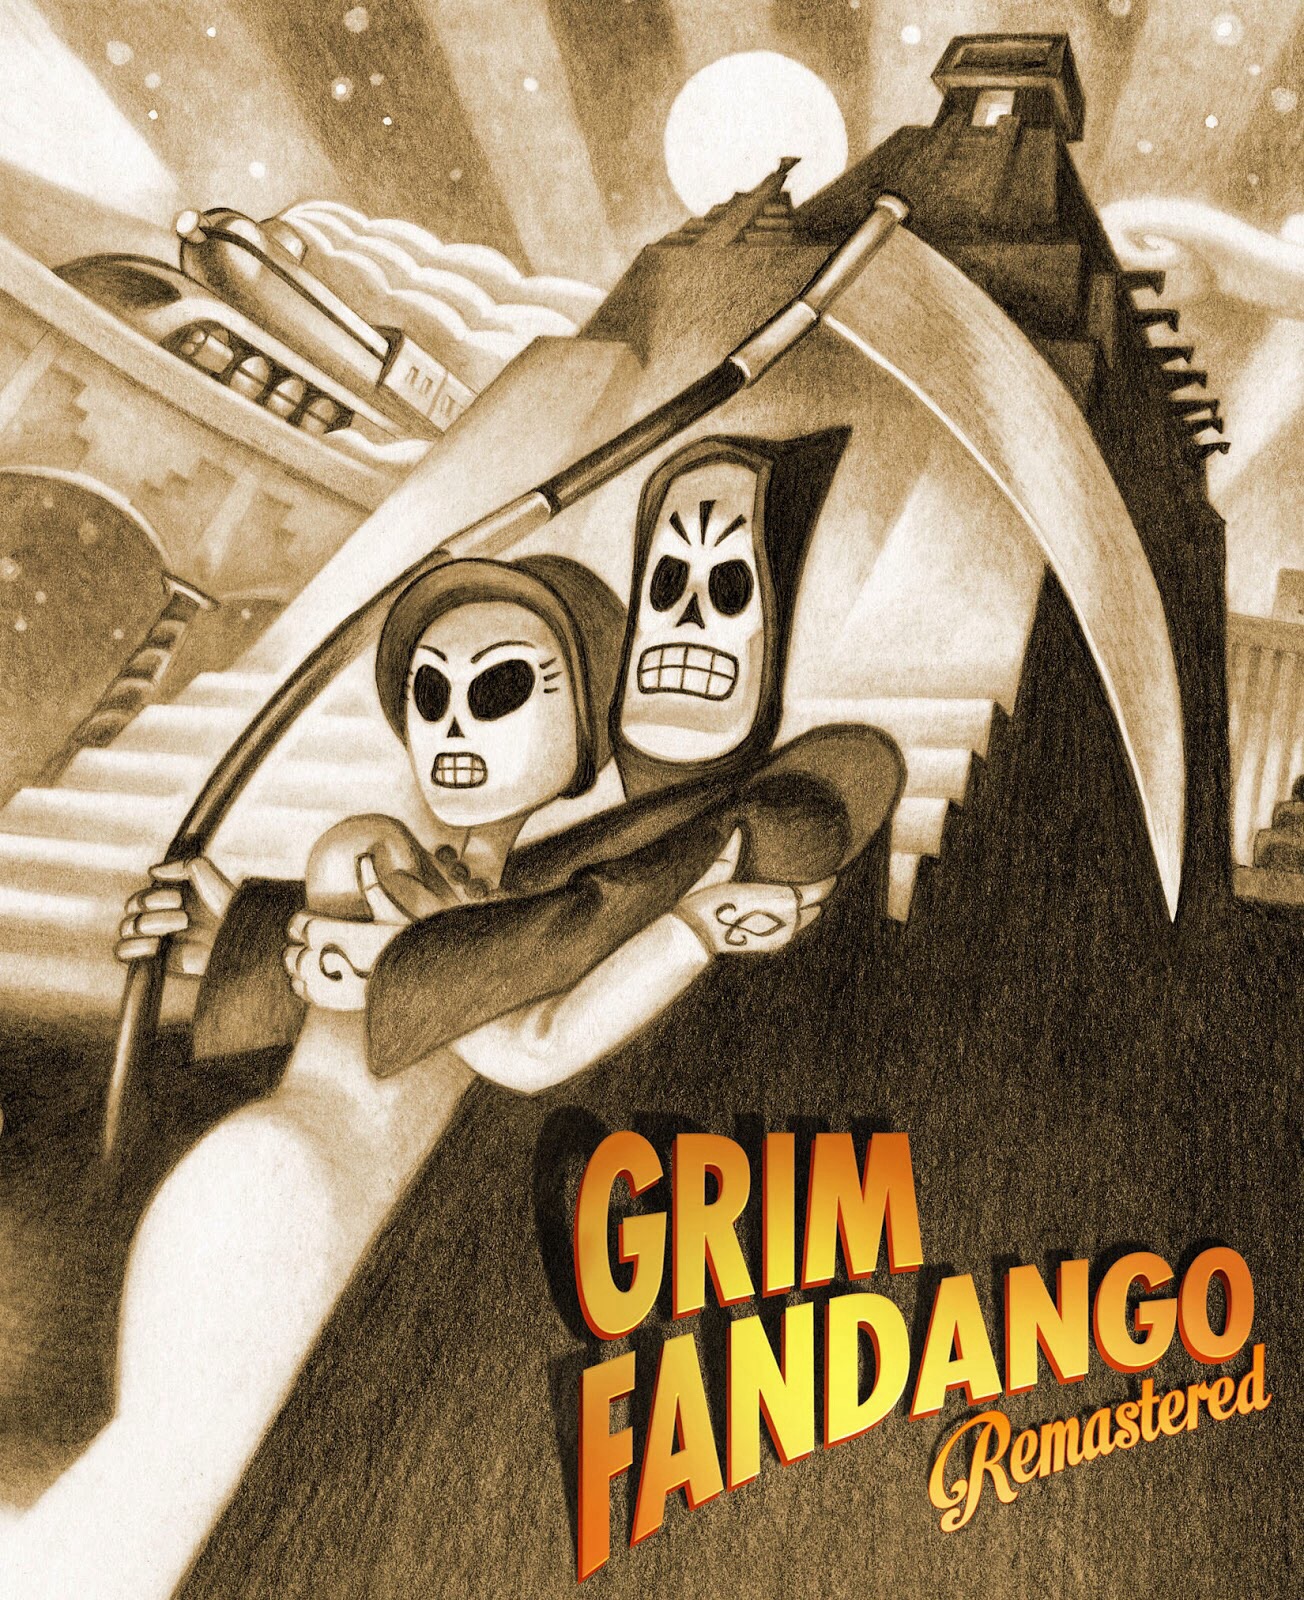 Grim Fandango Remastered Download